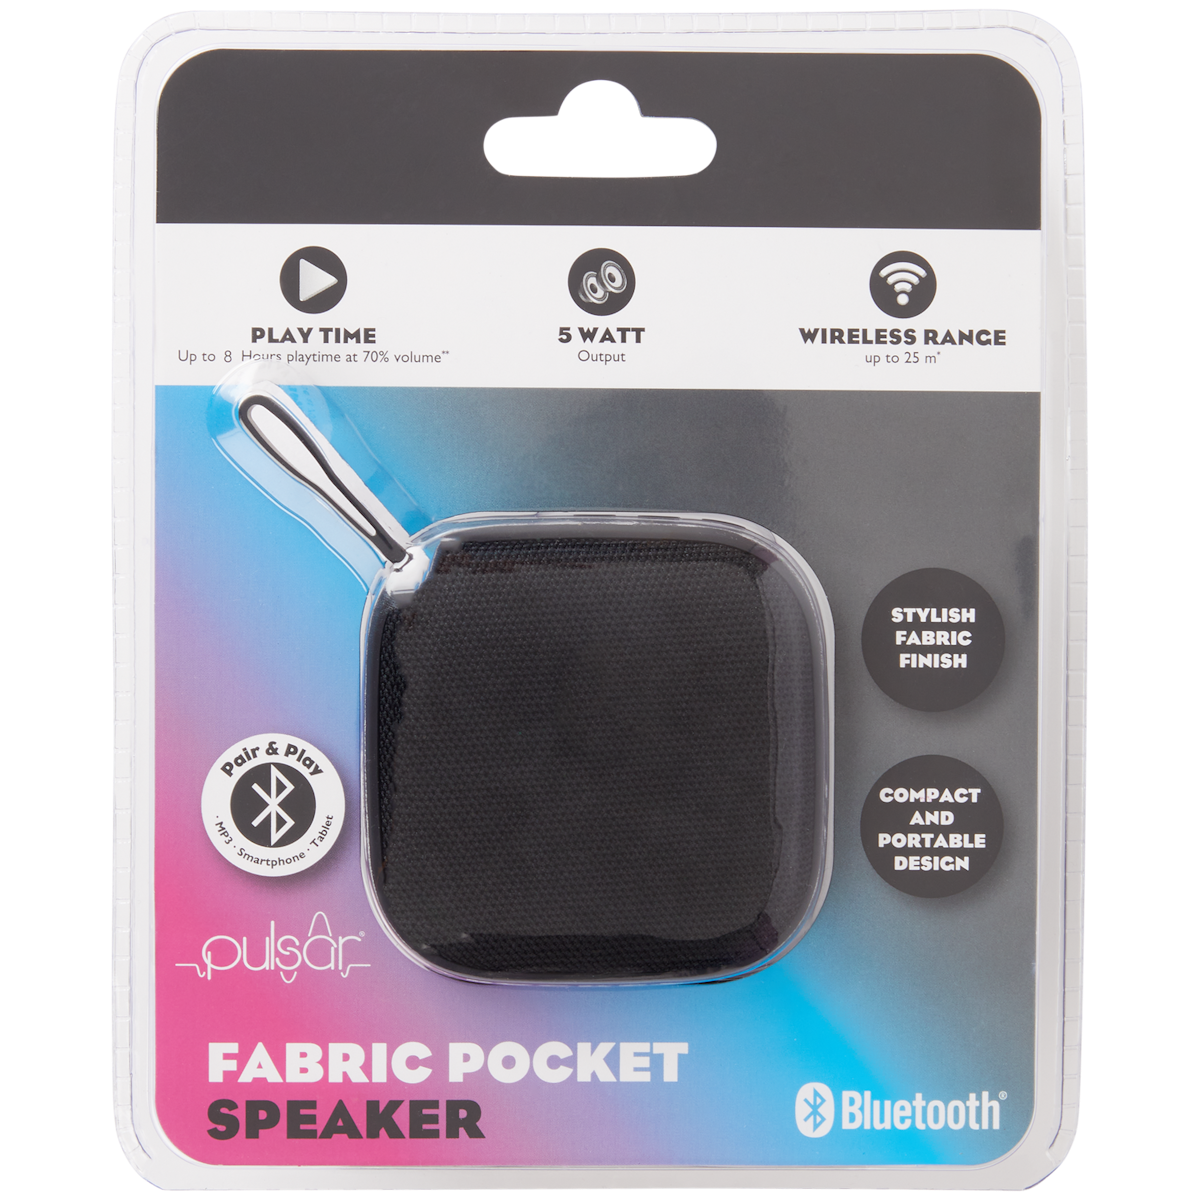 Pulsar Fabric Pocket bluetooth speaker